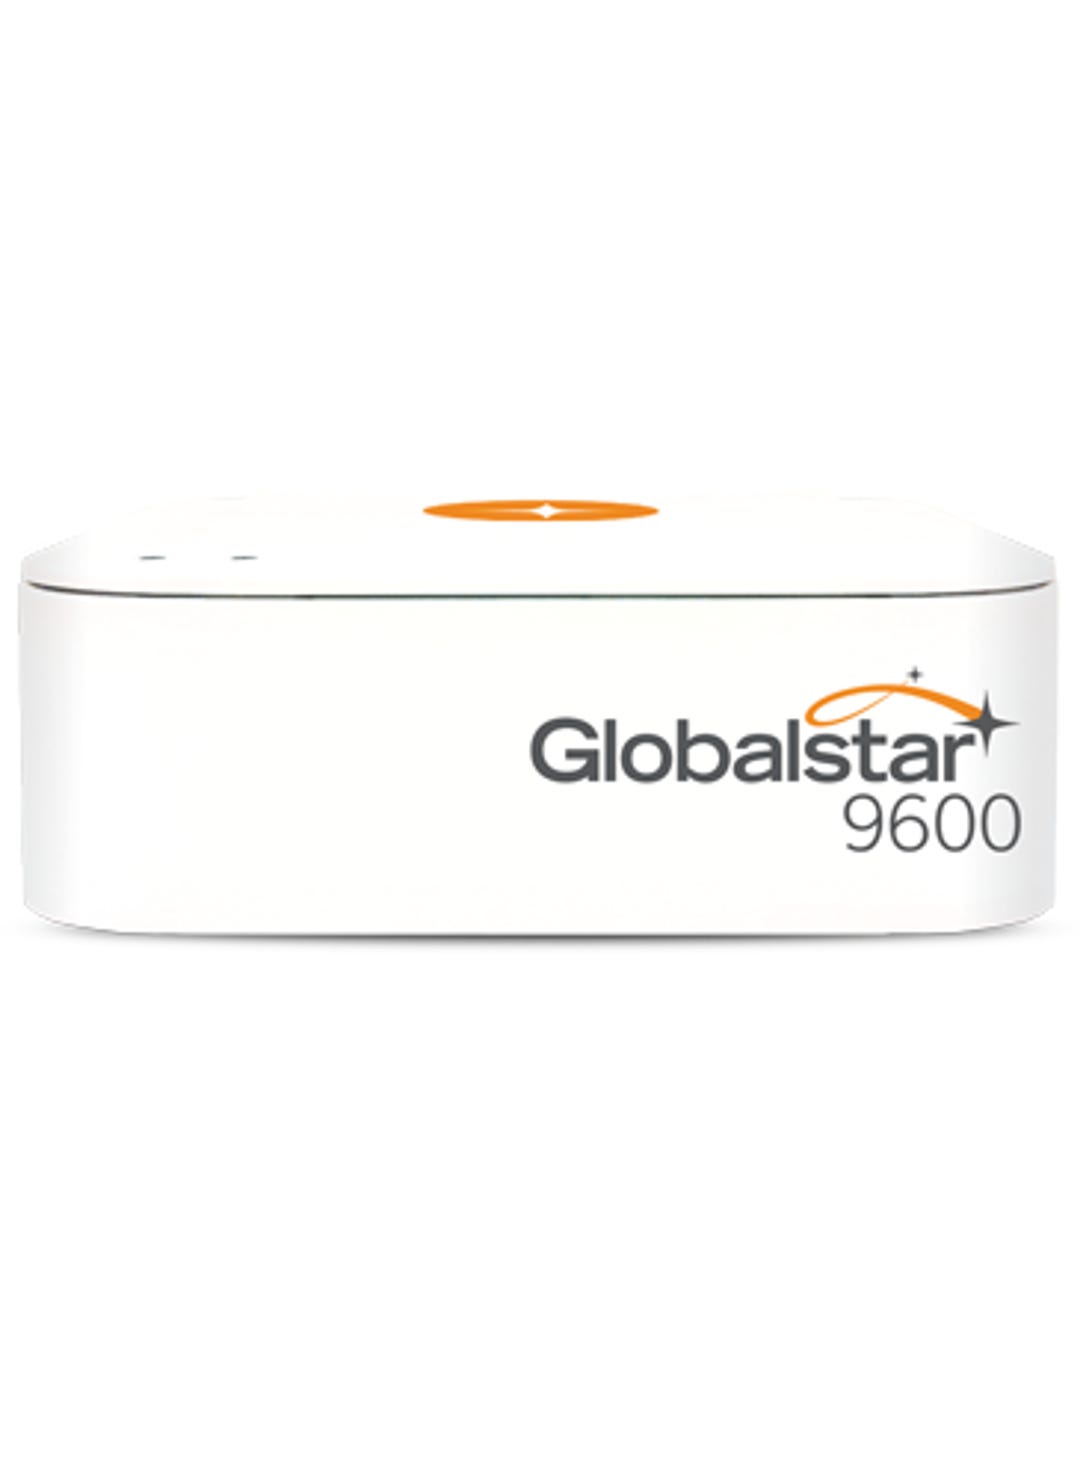 Globalstar 9600